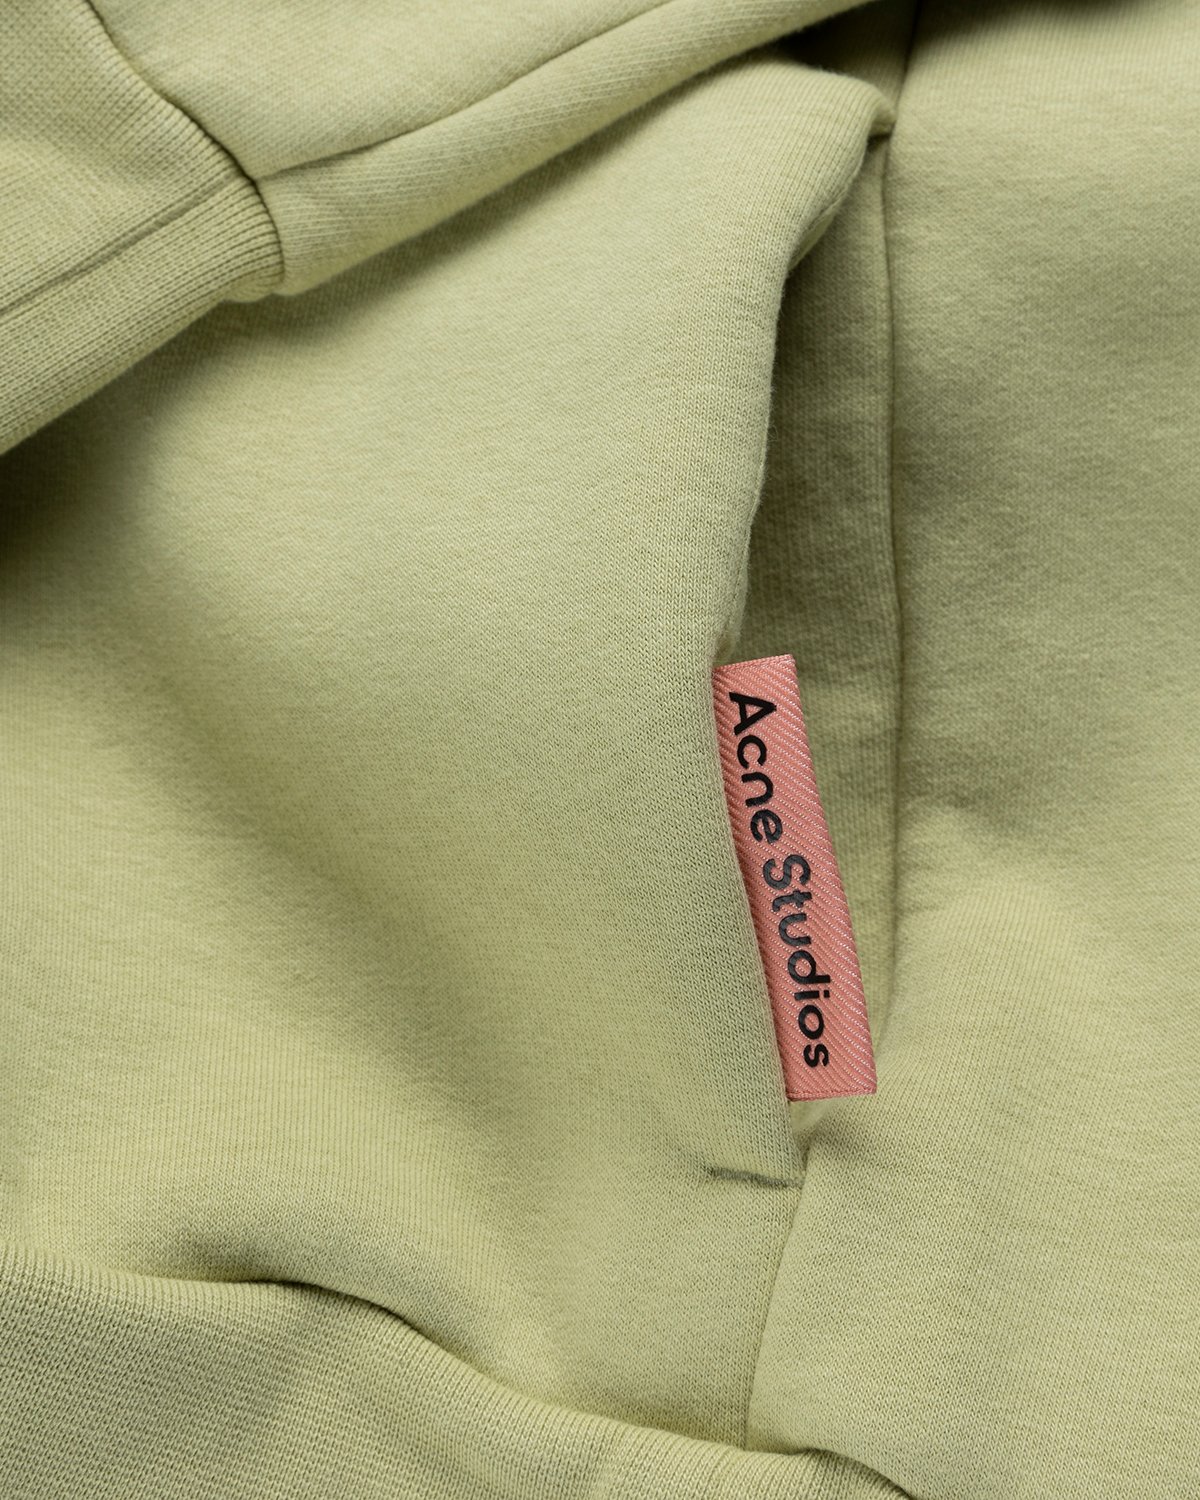 Acne Studios - Midweight Fleece Hooded Sweatshirt Pale Green - Clothing - Green - Image 4